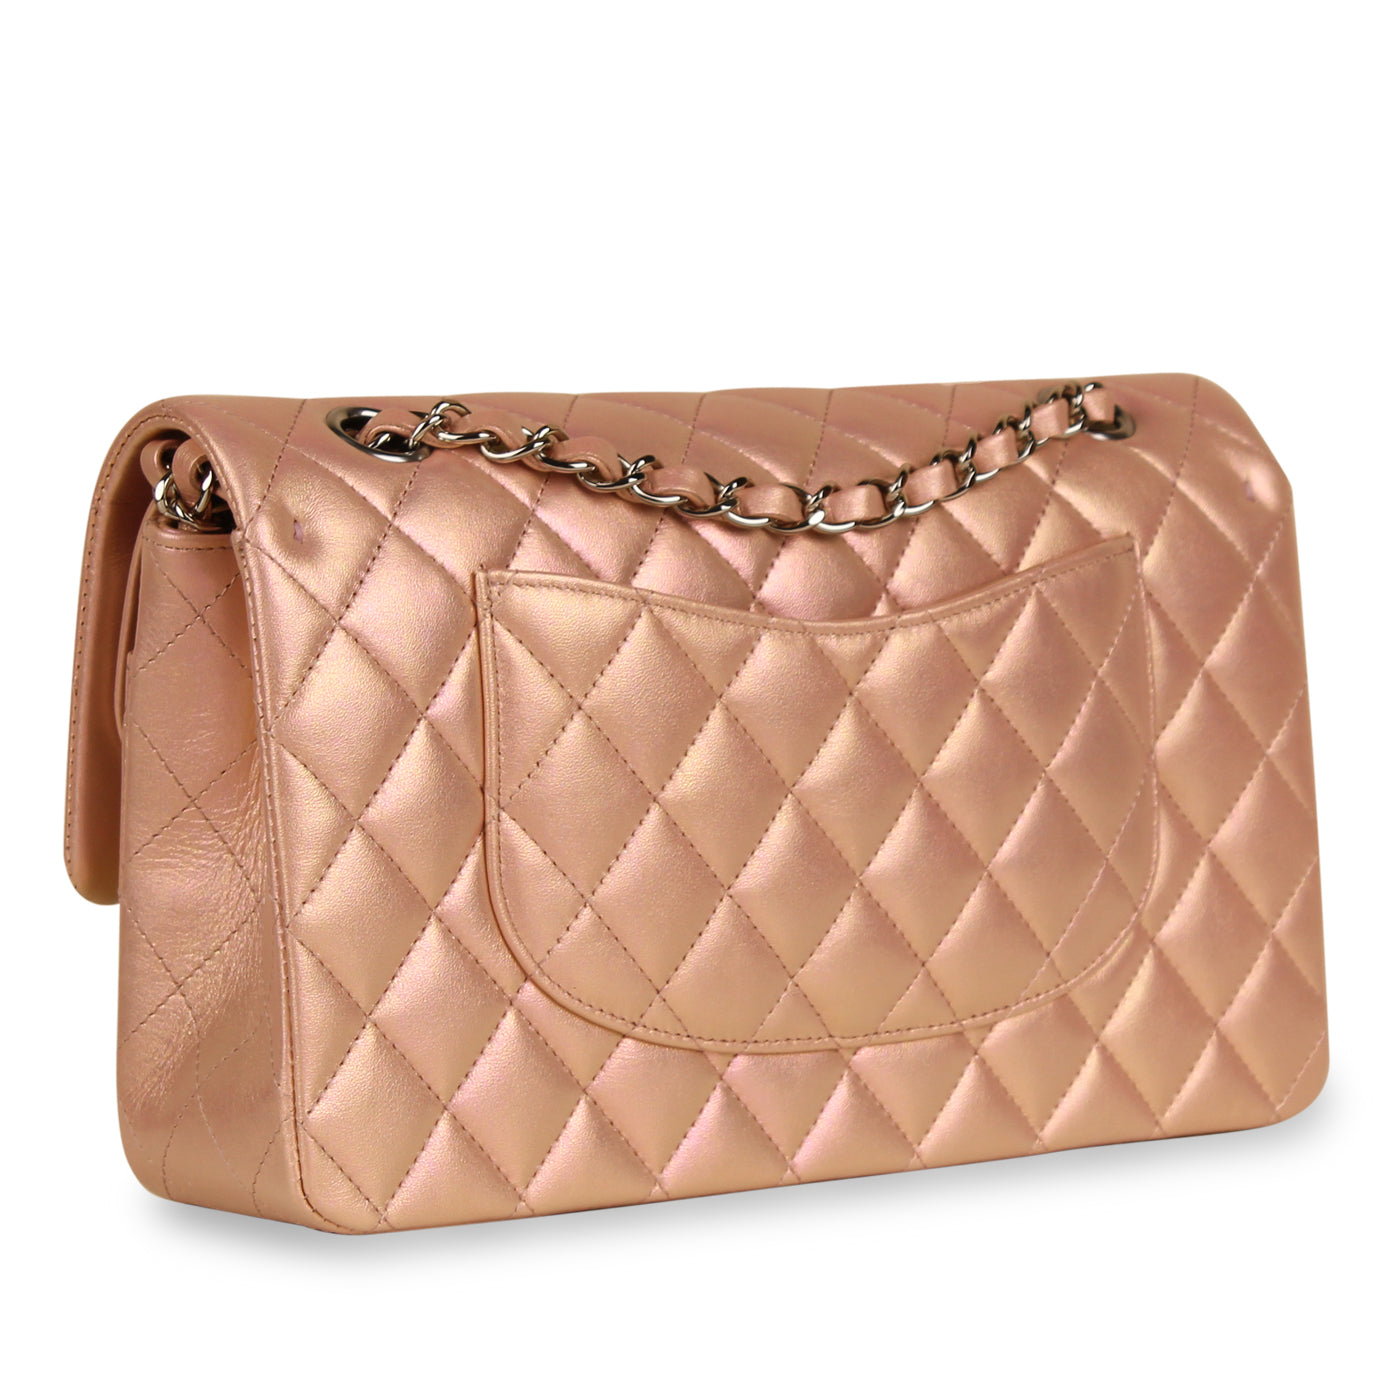 Chanel - Classic Flap Bag - Medium - Iridescent Pink - 2021 - Brand New